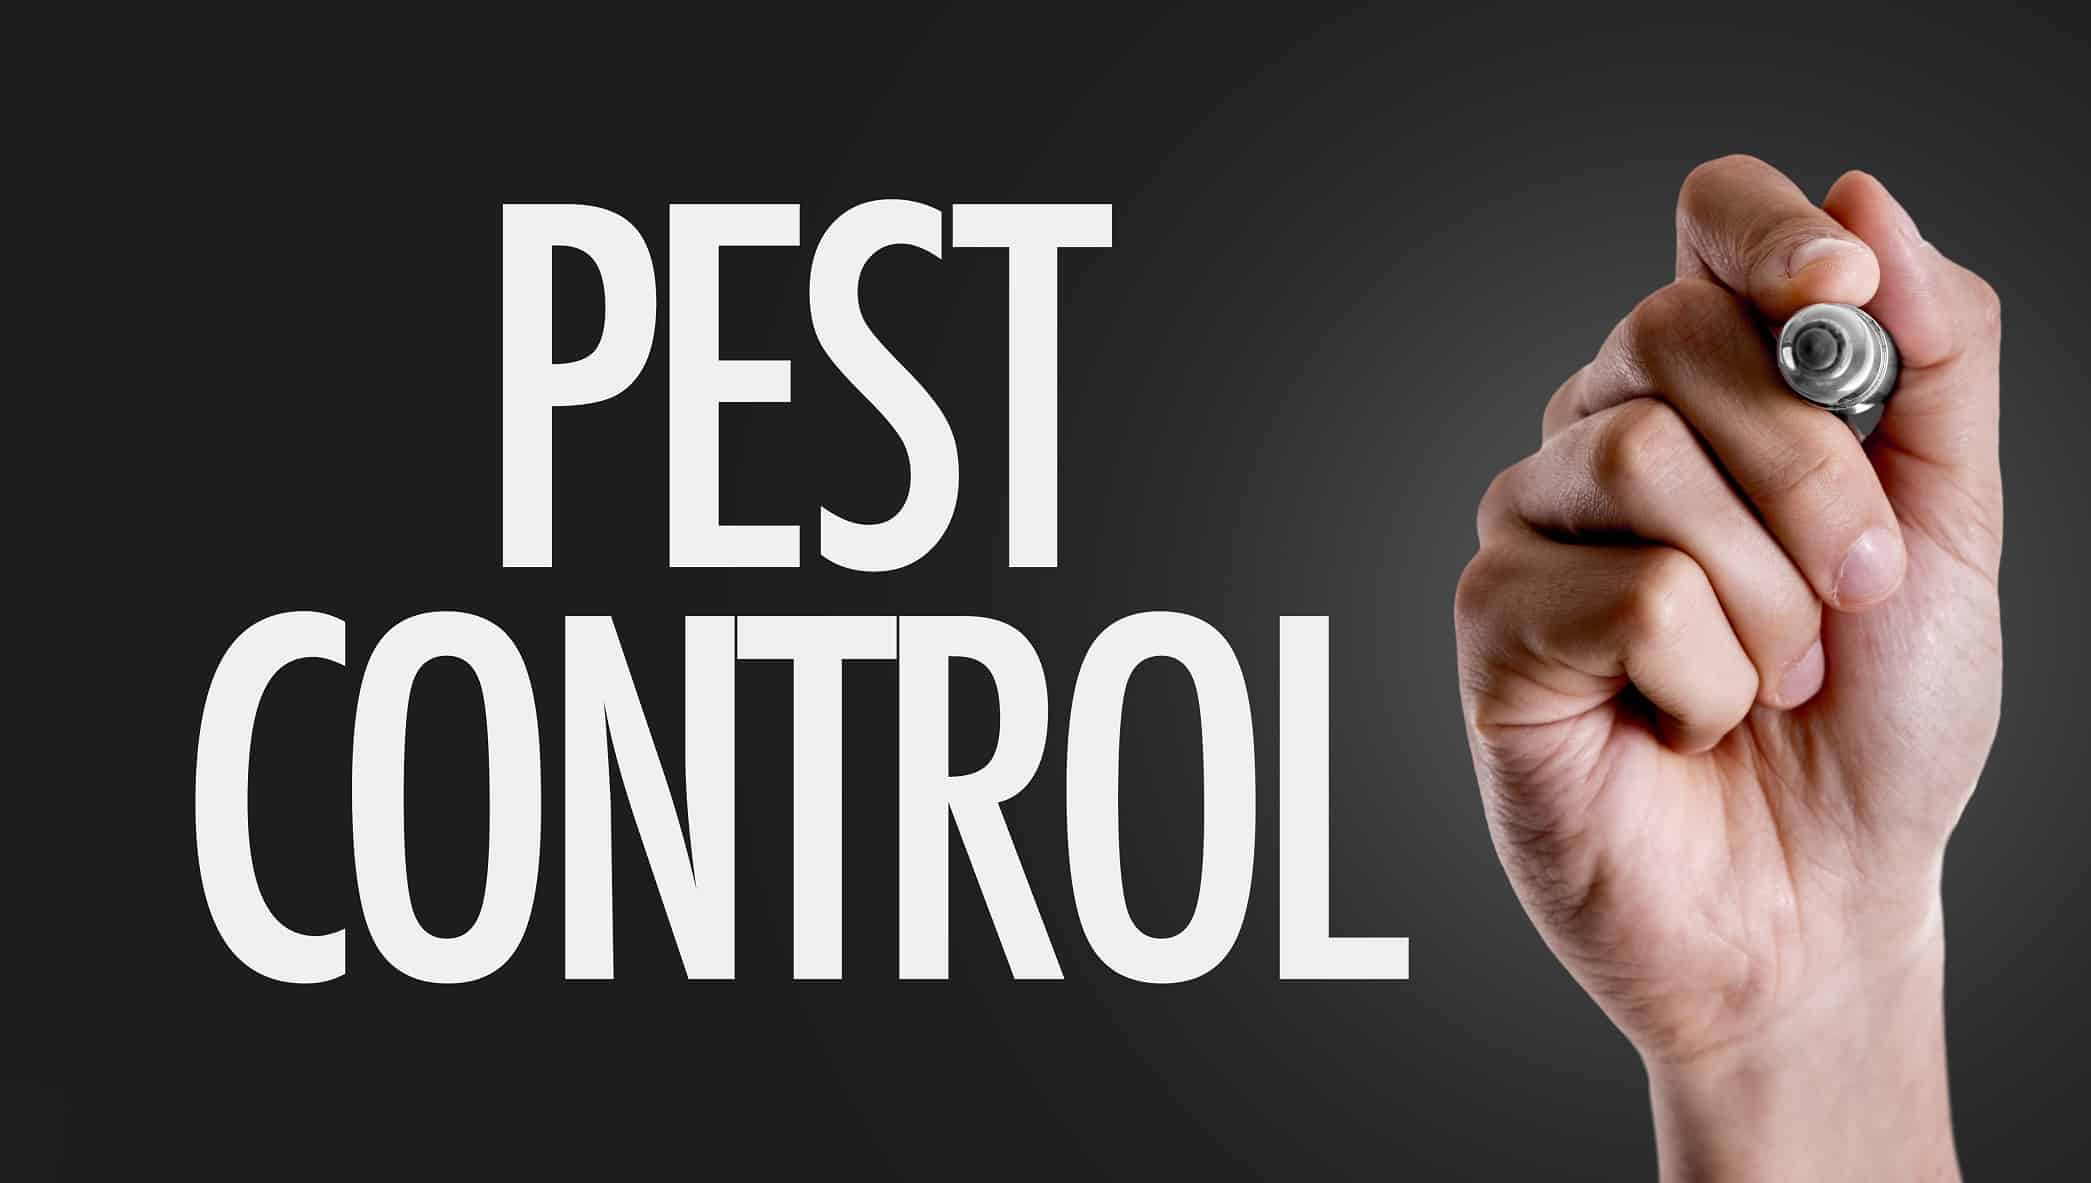 How profitable is pest control?